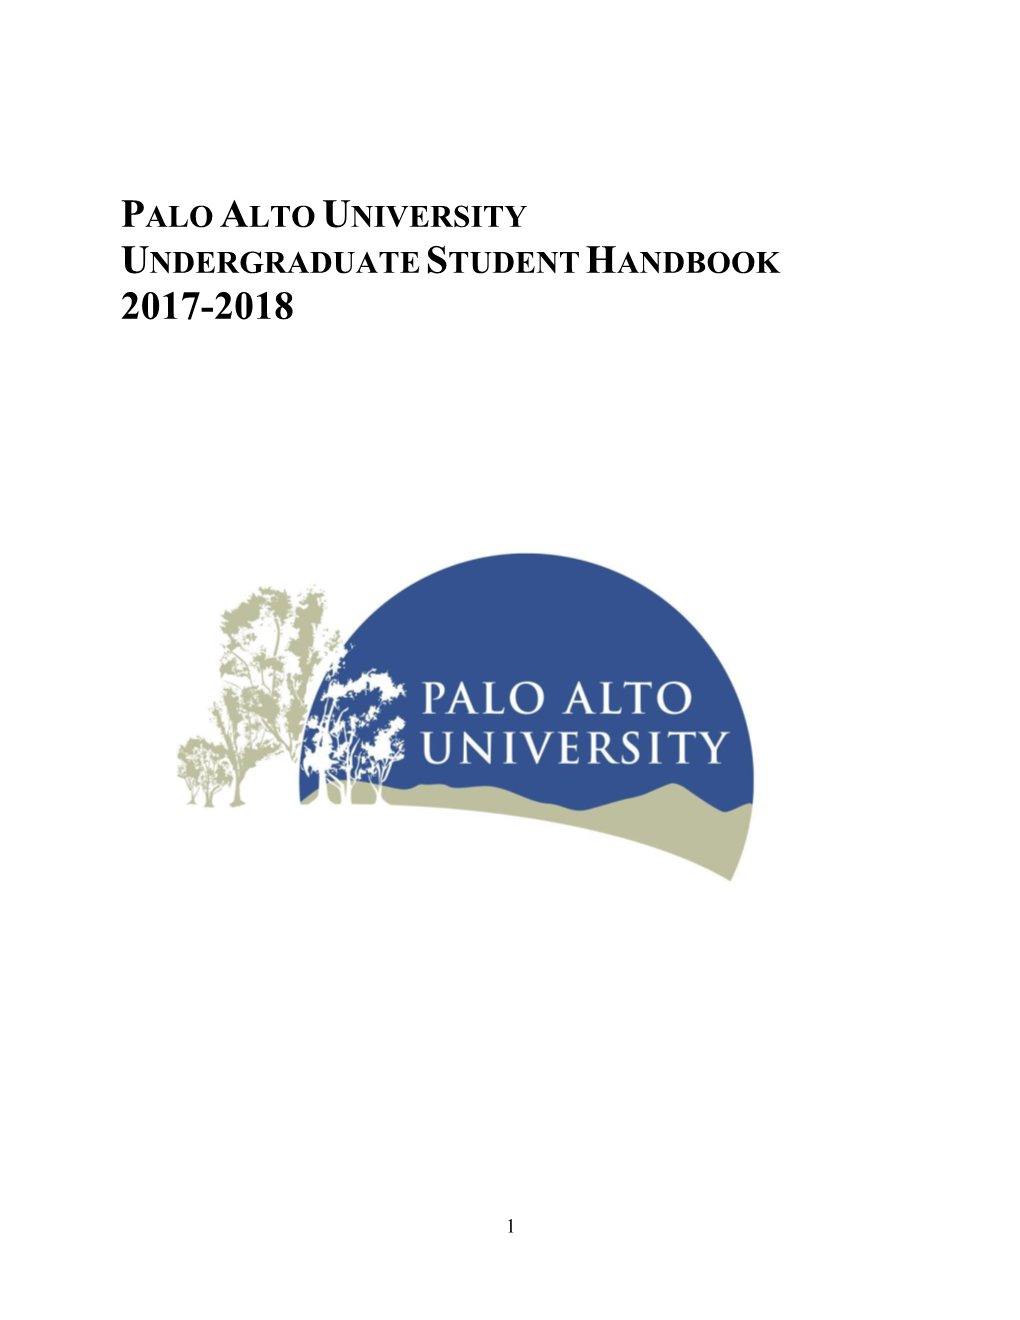 Palo Alto University Undergraduate Student Handbook 2017-2018